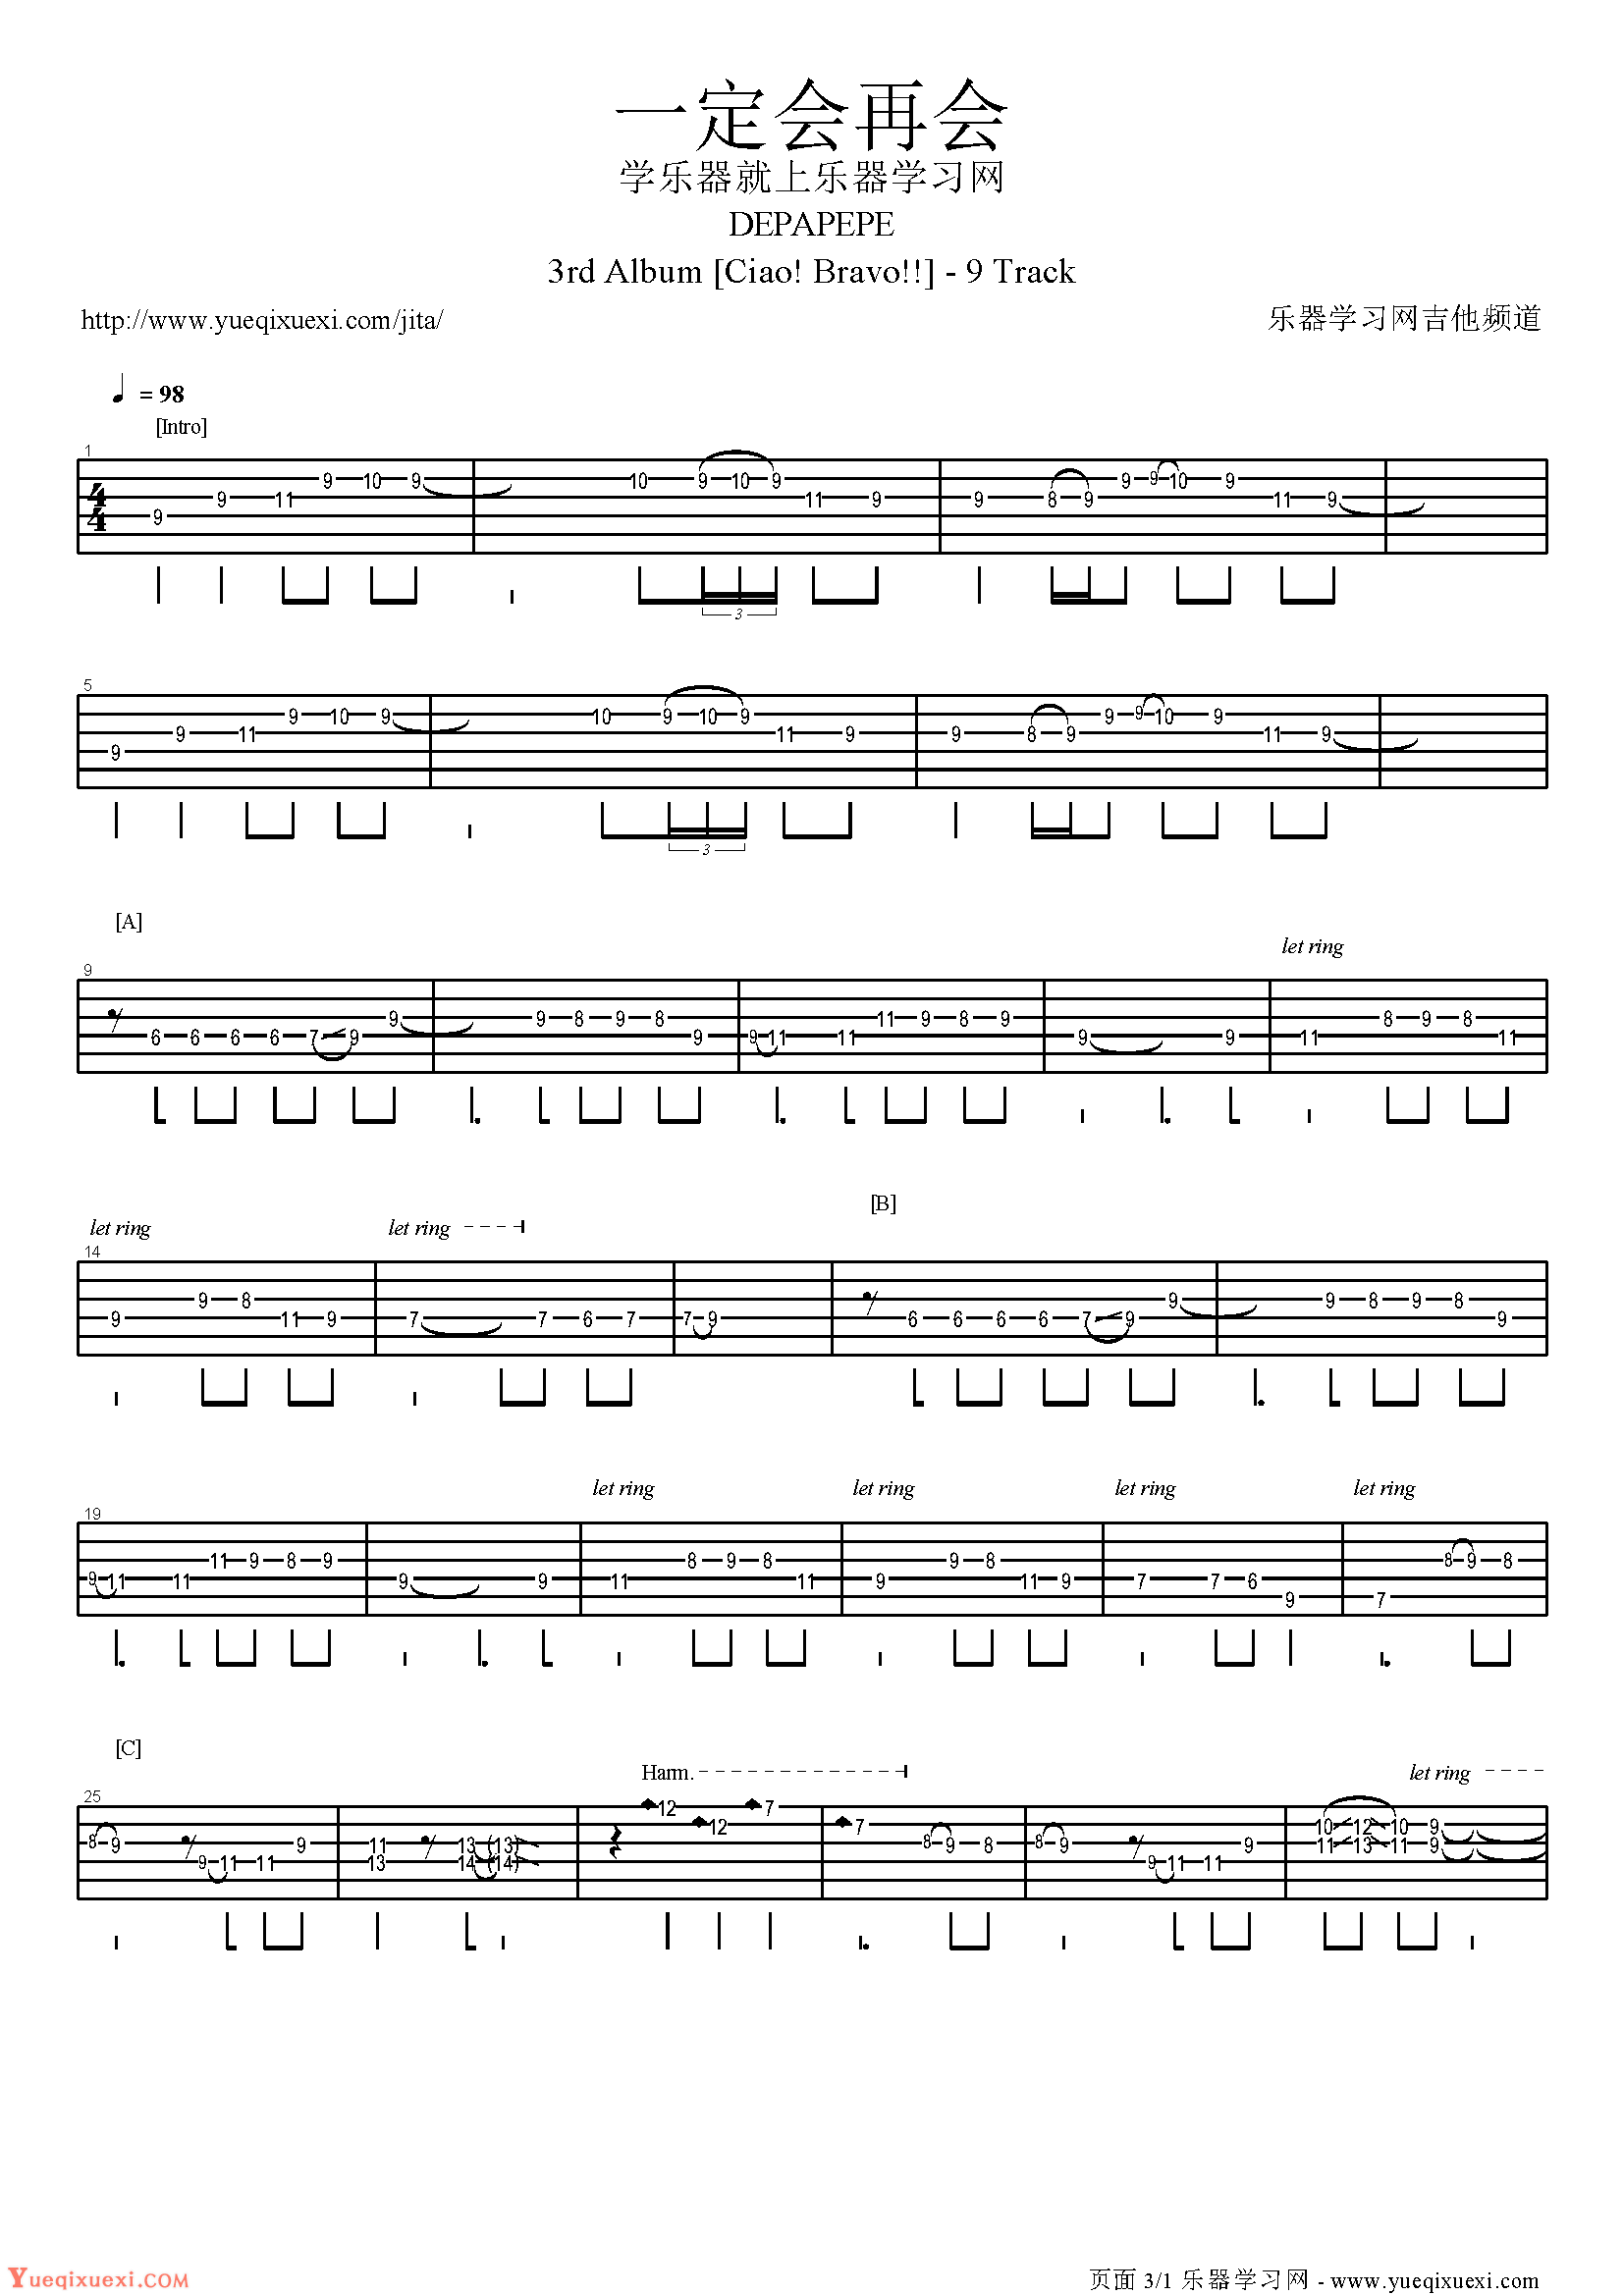 DEPAPEPE吉他谱【start】高清图片吉他六线谱-吉他曲谱 - 乐器学习网